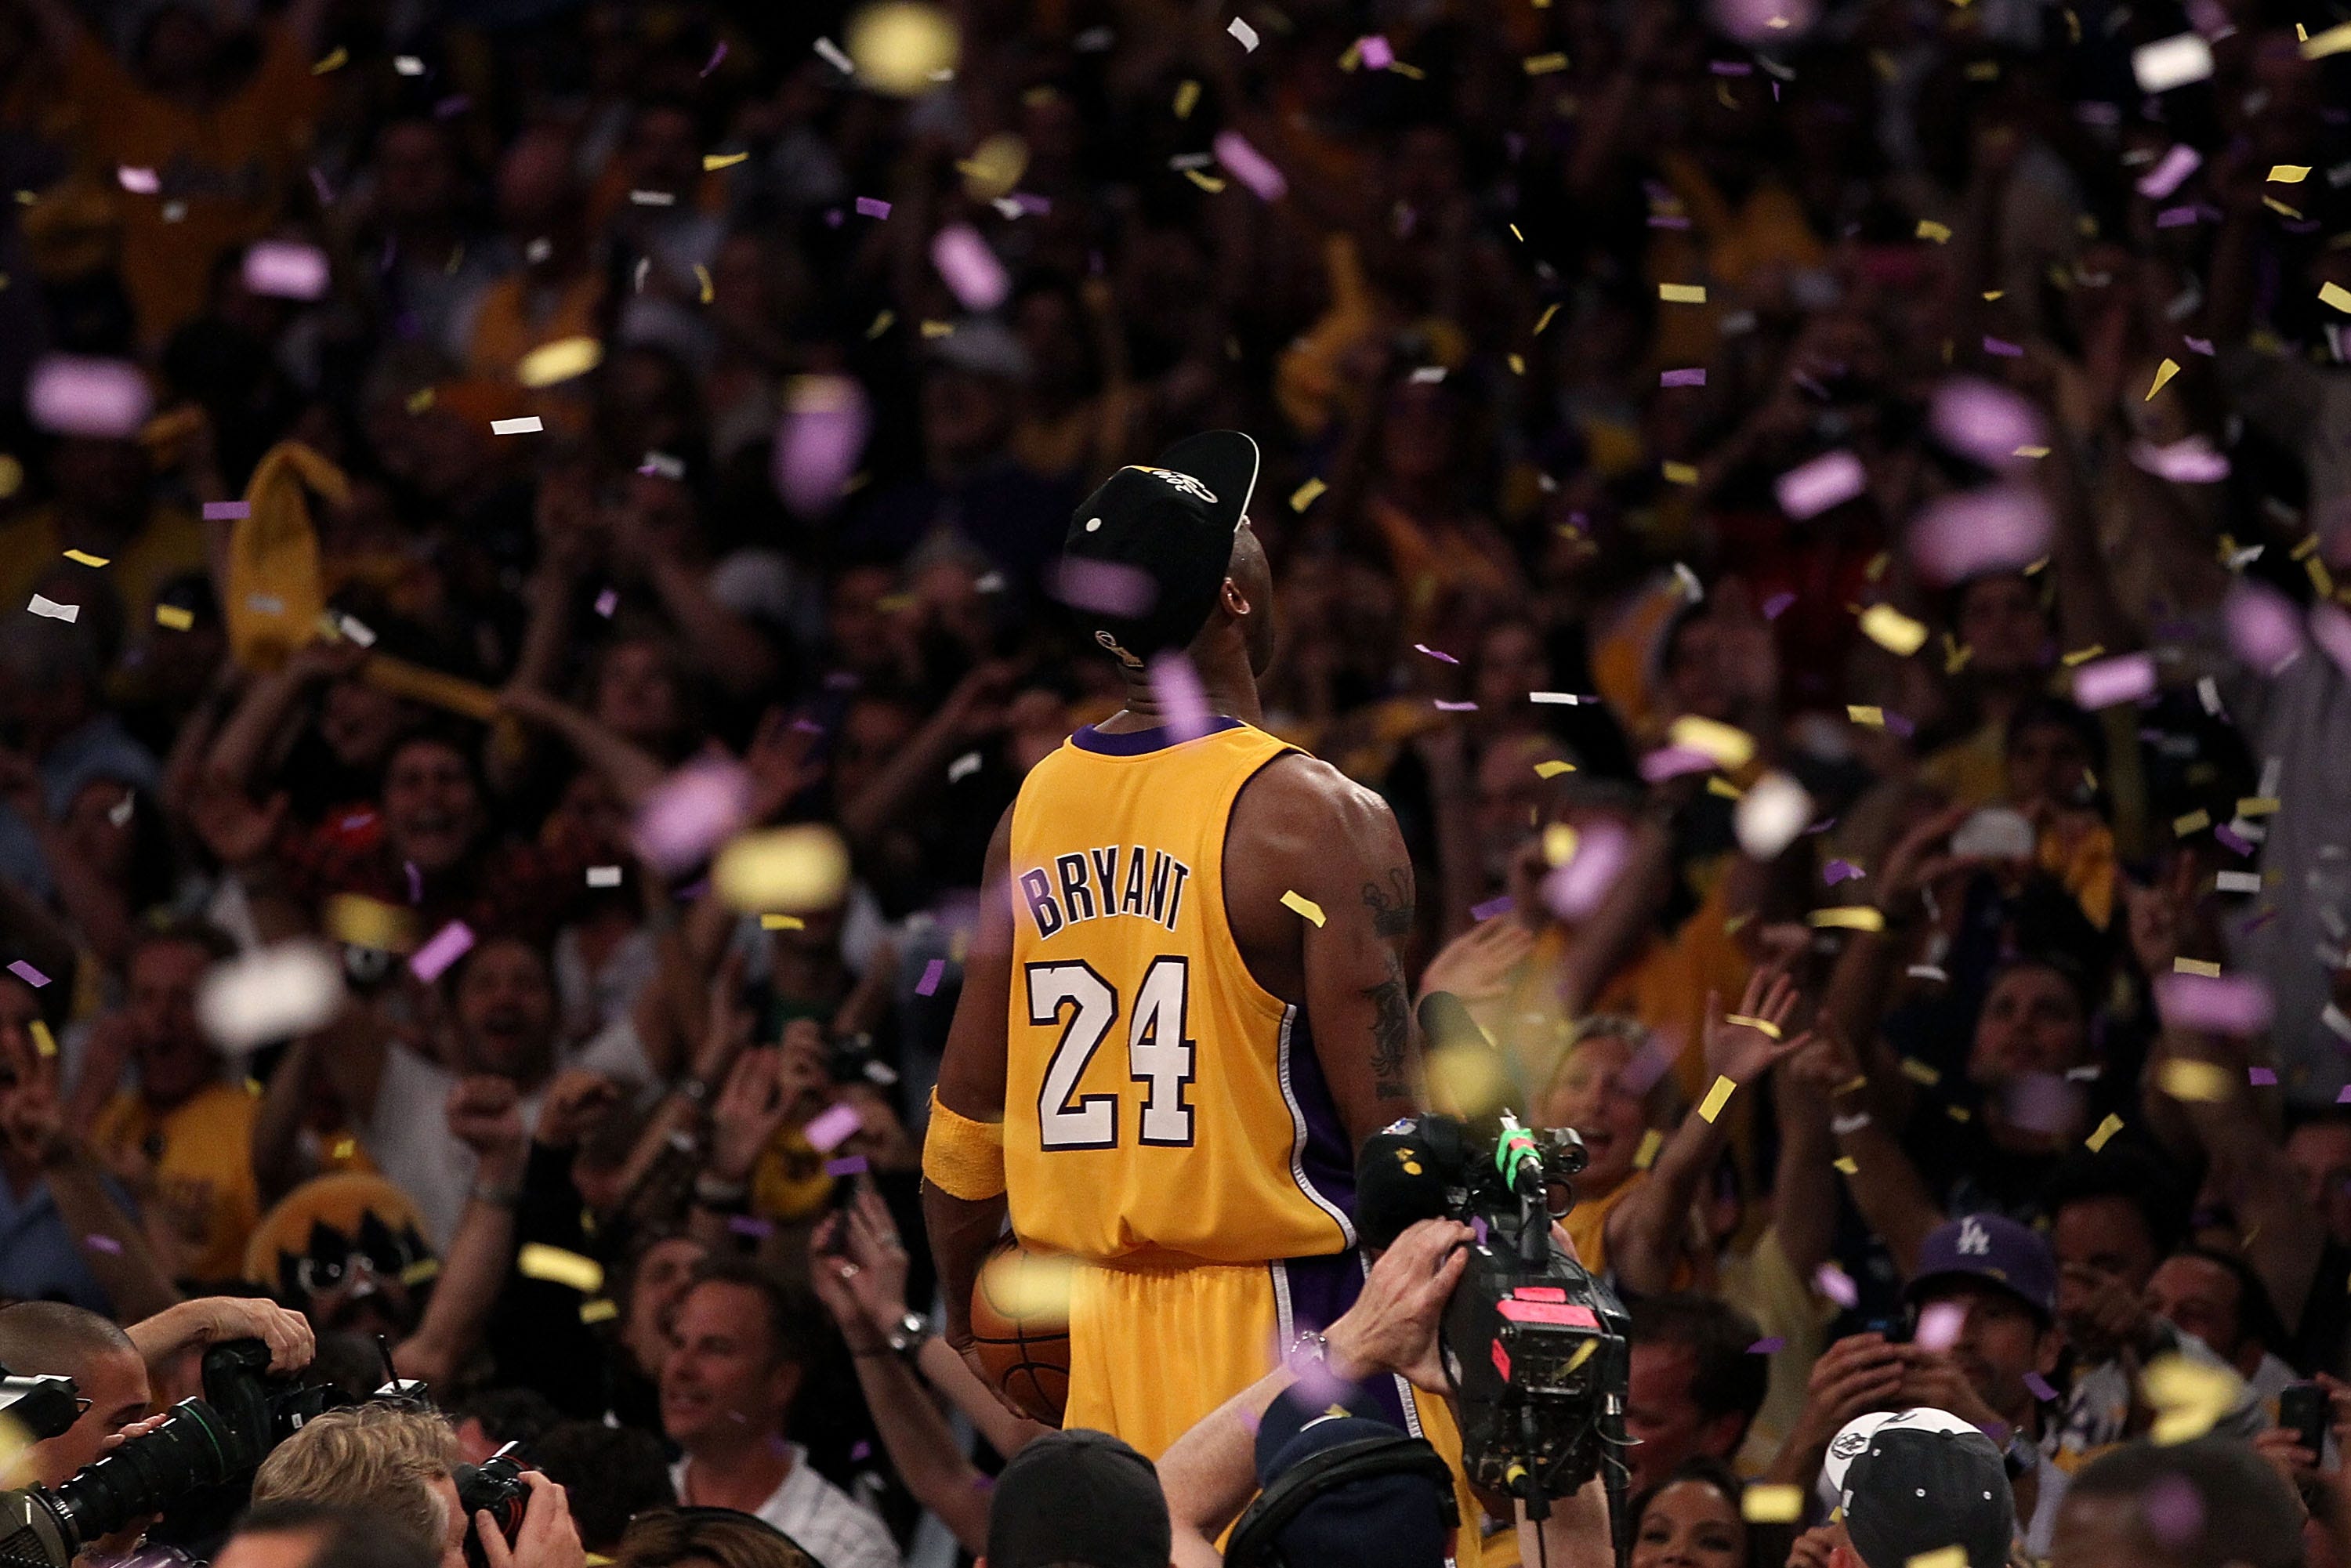 Kobe Bryant celebrates after winning the 2010 NBA Finals.